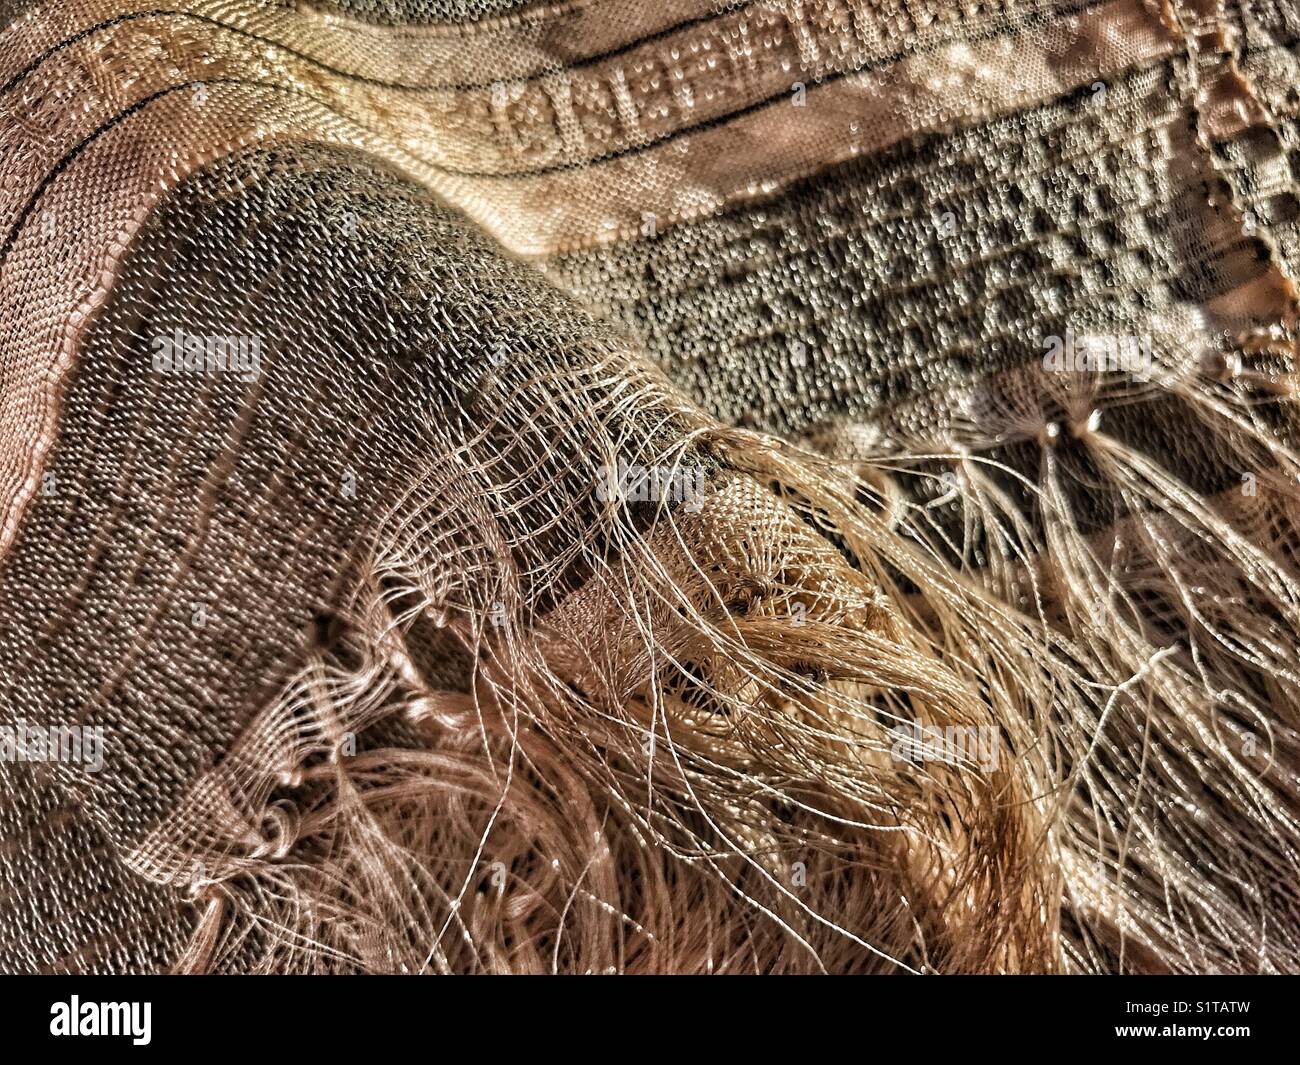 Stylish Gold Thread Scarves Ladies Silk Scarf - China Hijab Silk and Stripe Scarf  price